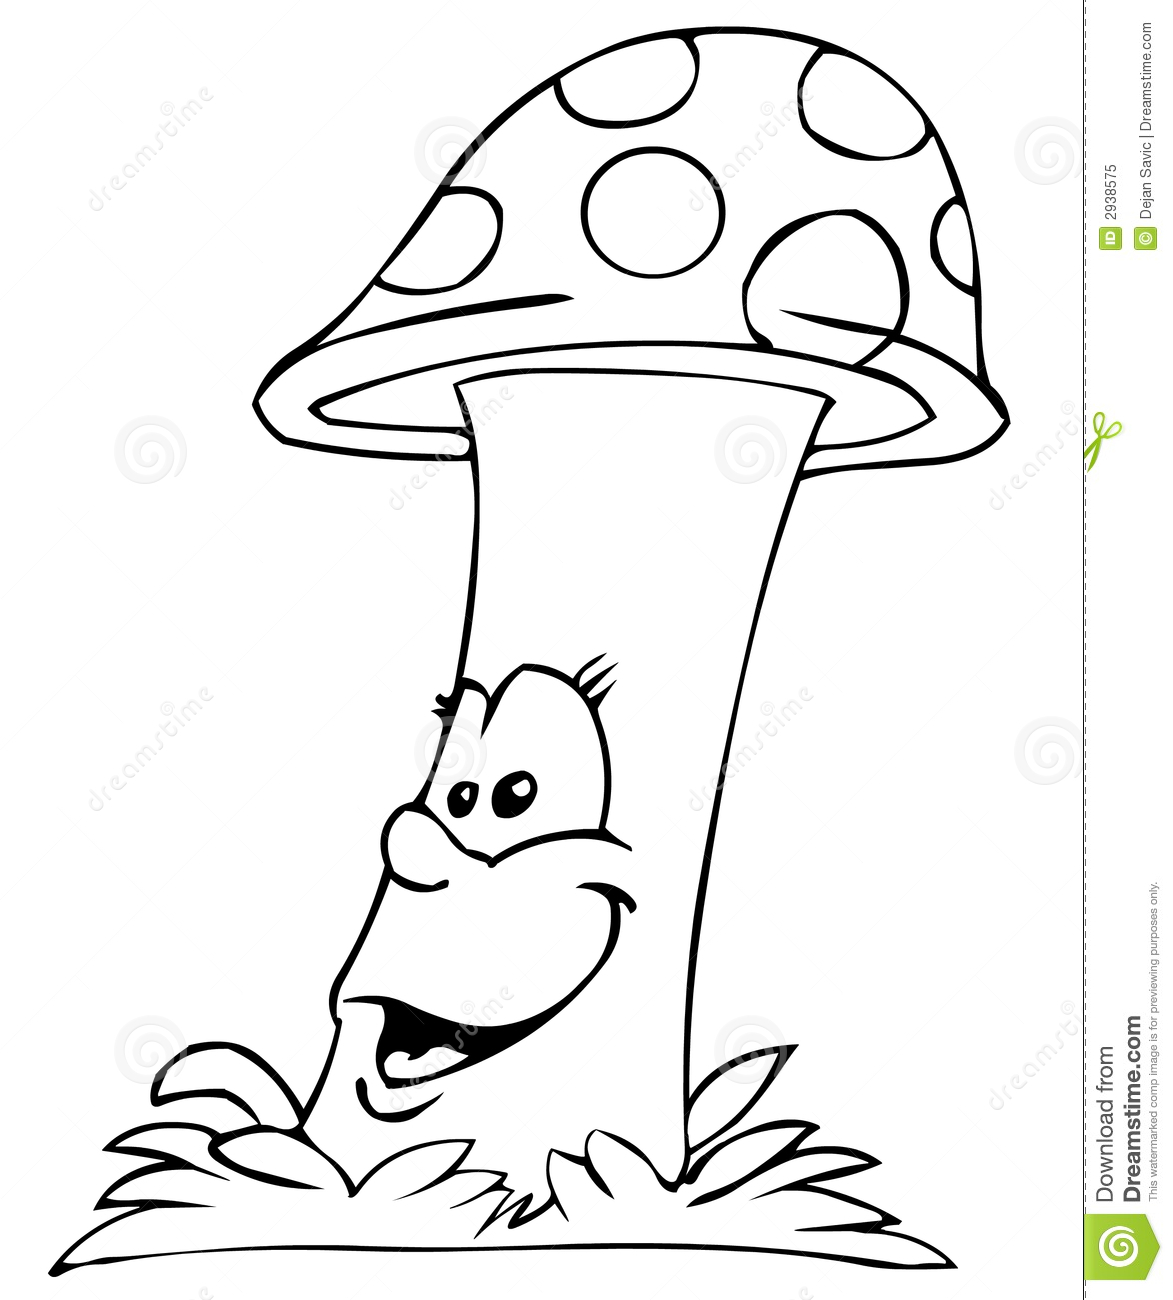 Mushroom Clipart Black And White Smiling Mushroom In Black And